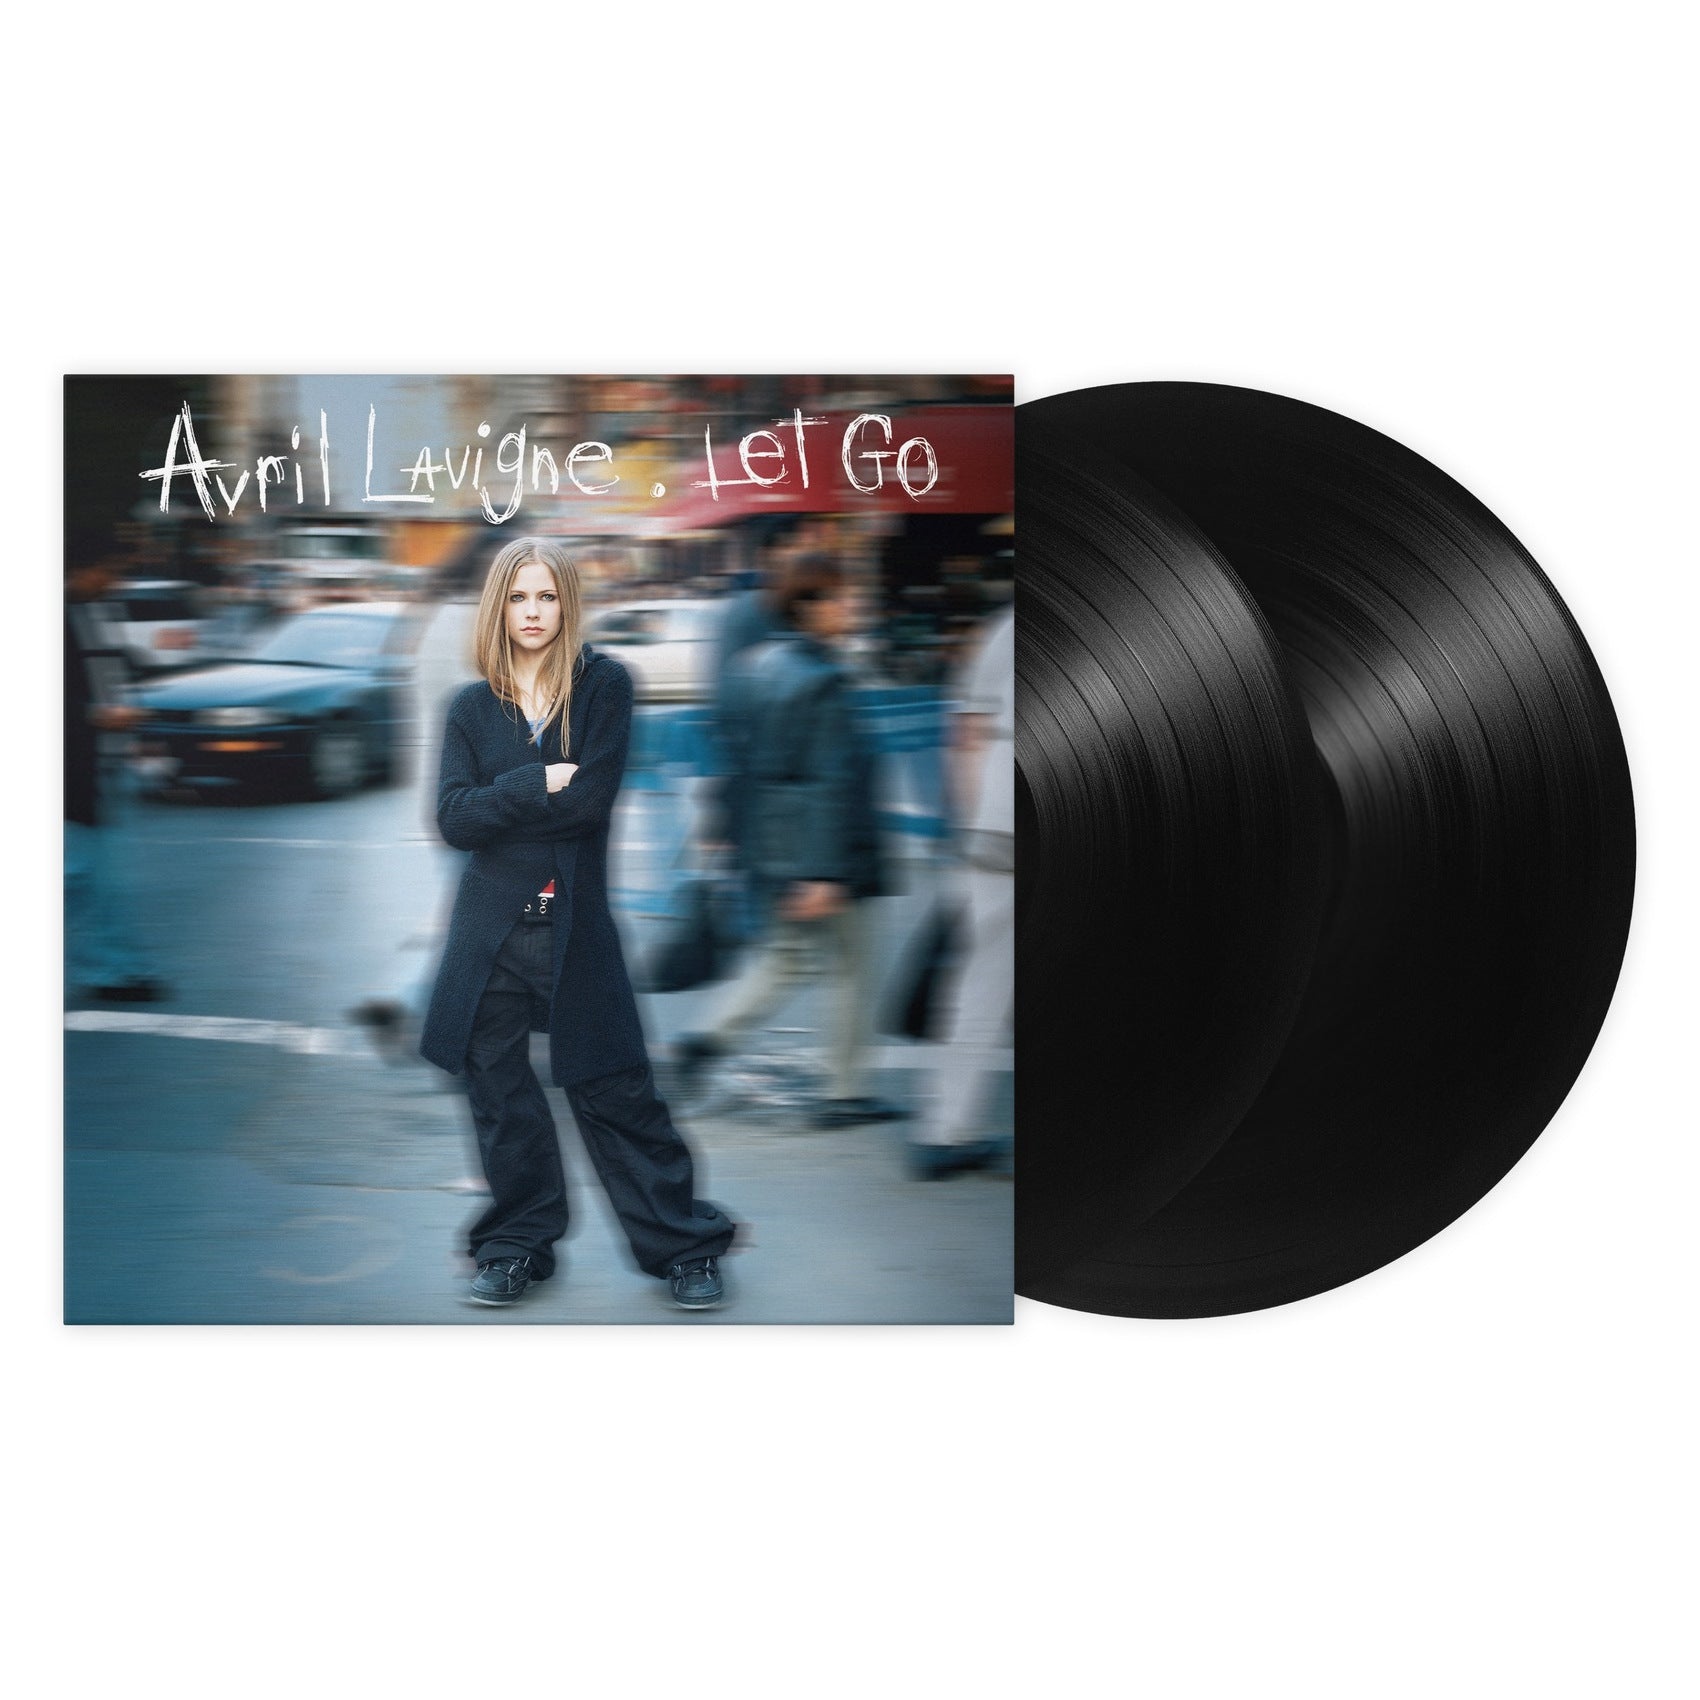 AVRIL LAVIGNE - Let Go (20th Anniversary Edition) - 2LP - Black Vinyl [JUN 21]